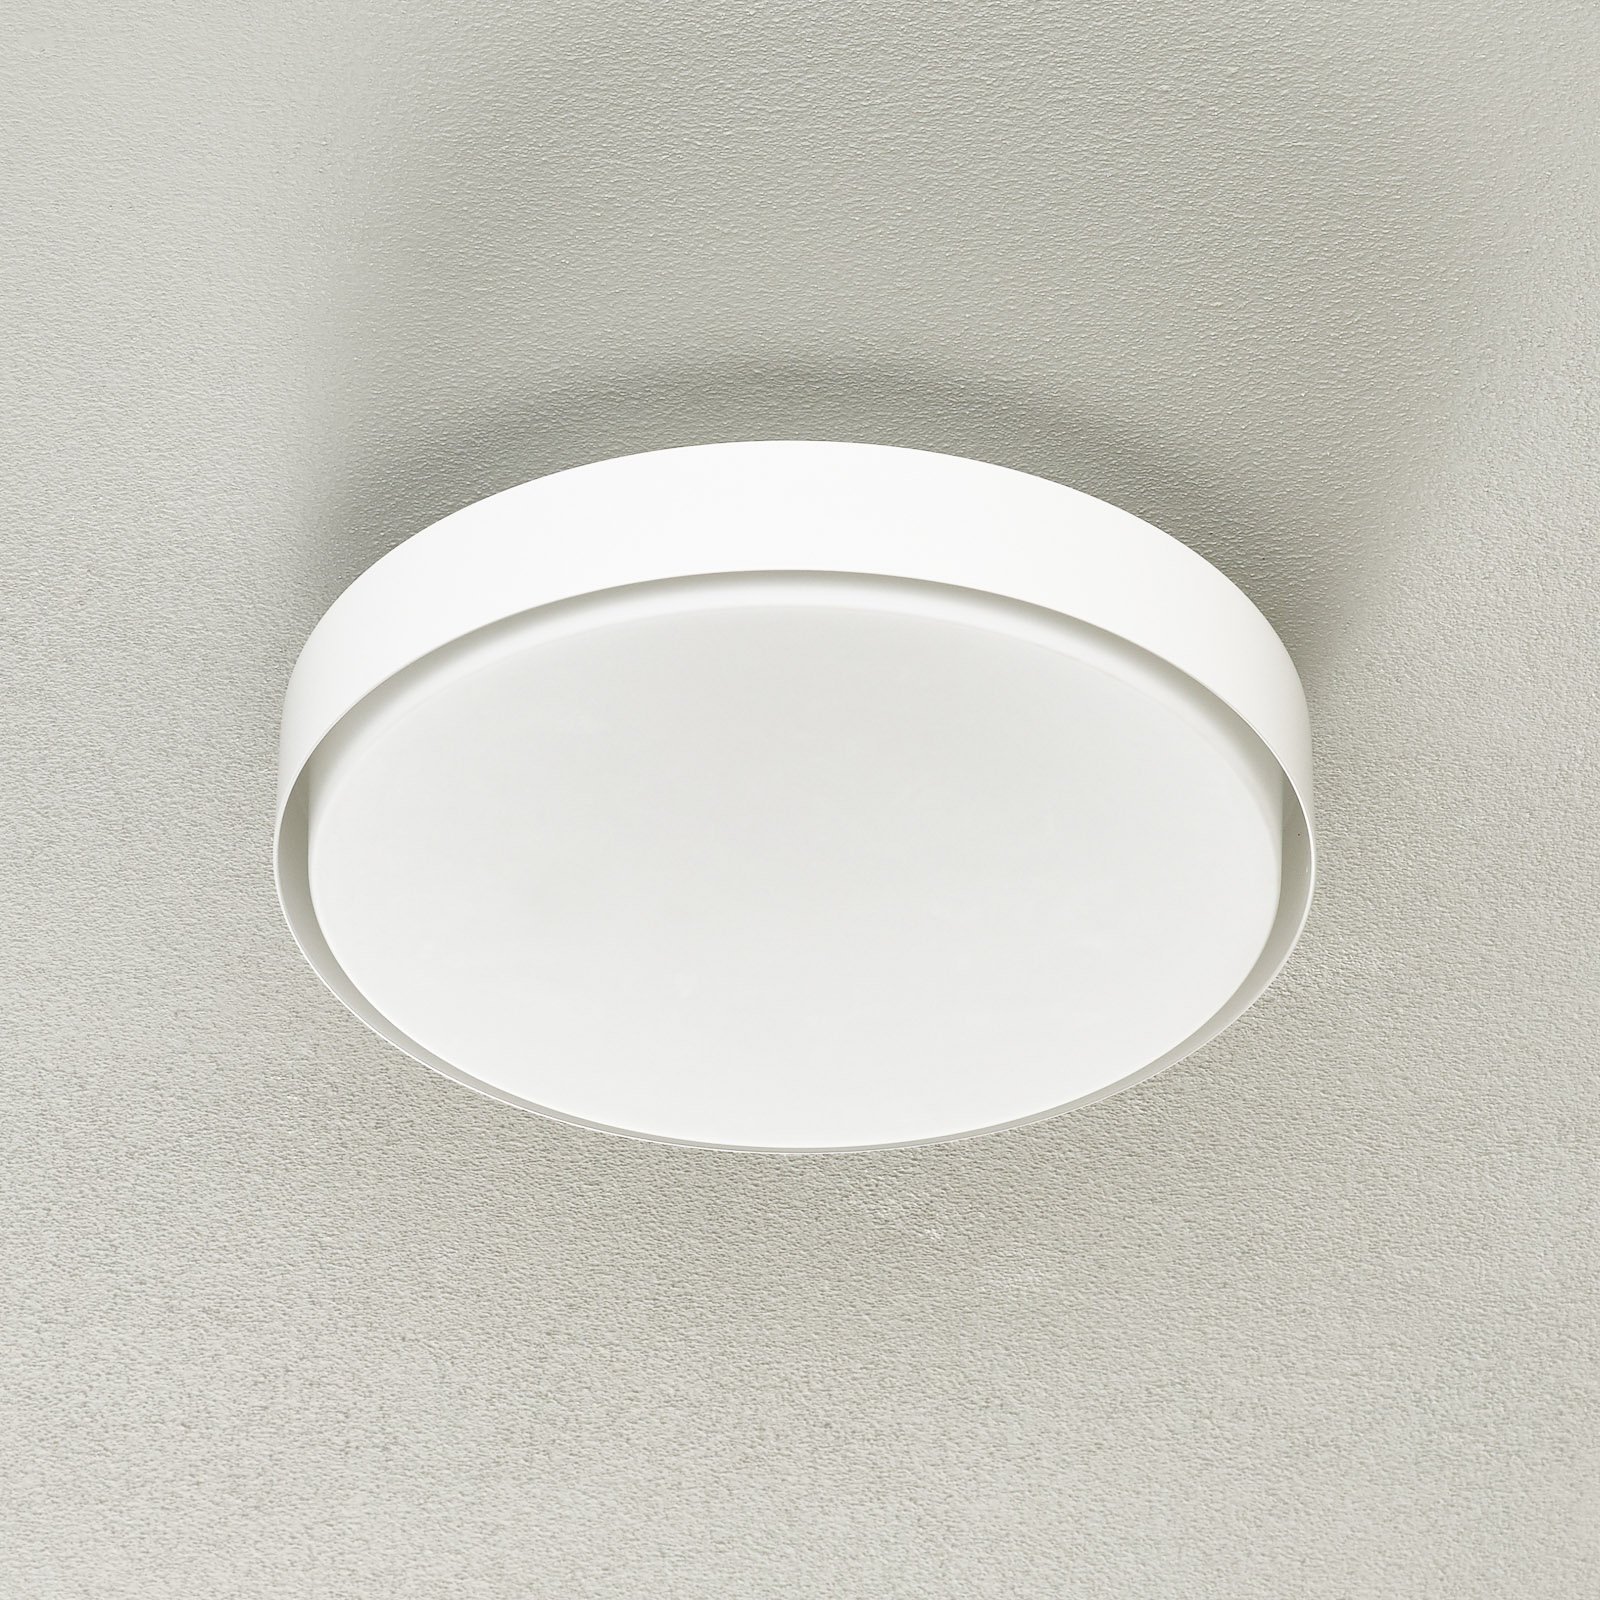 BEGA 34278 LED-kattovalaisin, valkoinen, Ø 36 cm